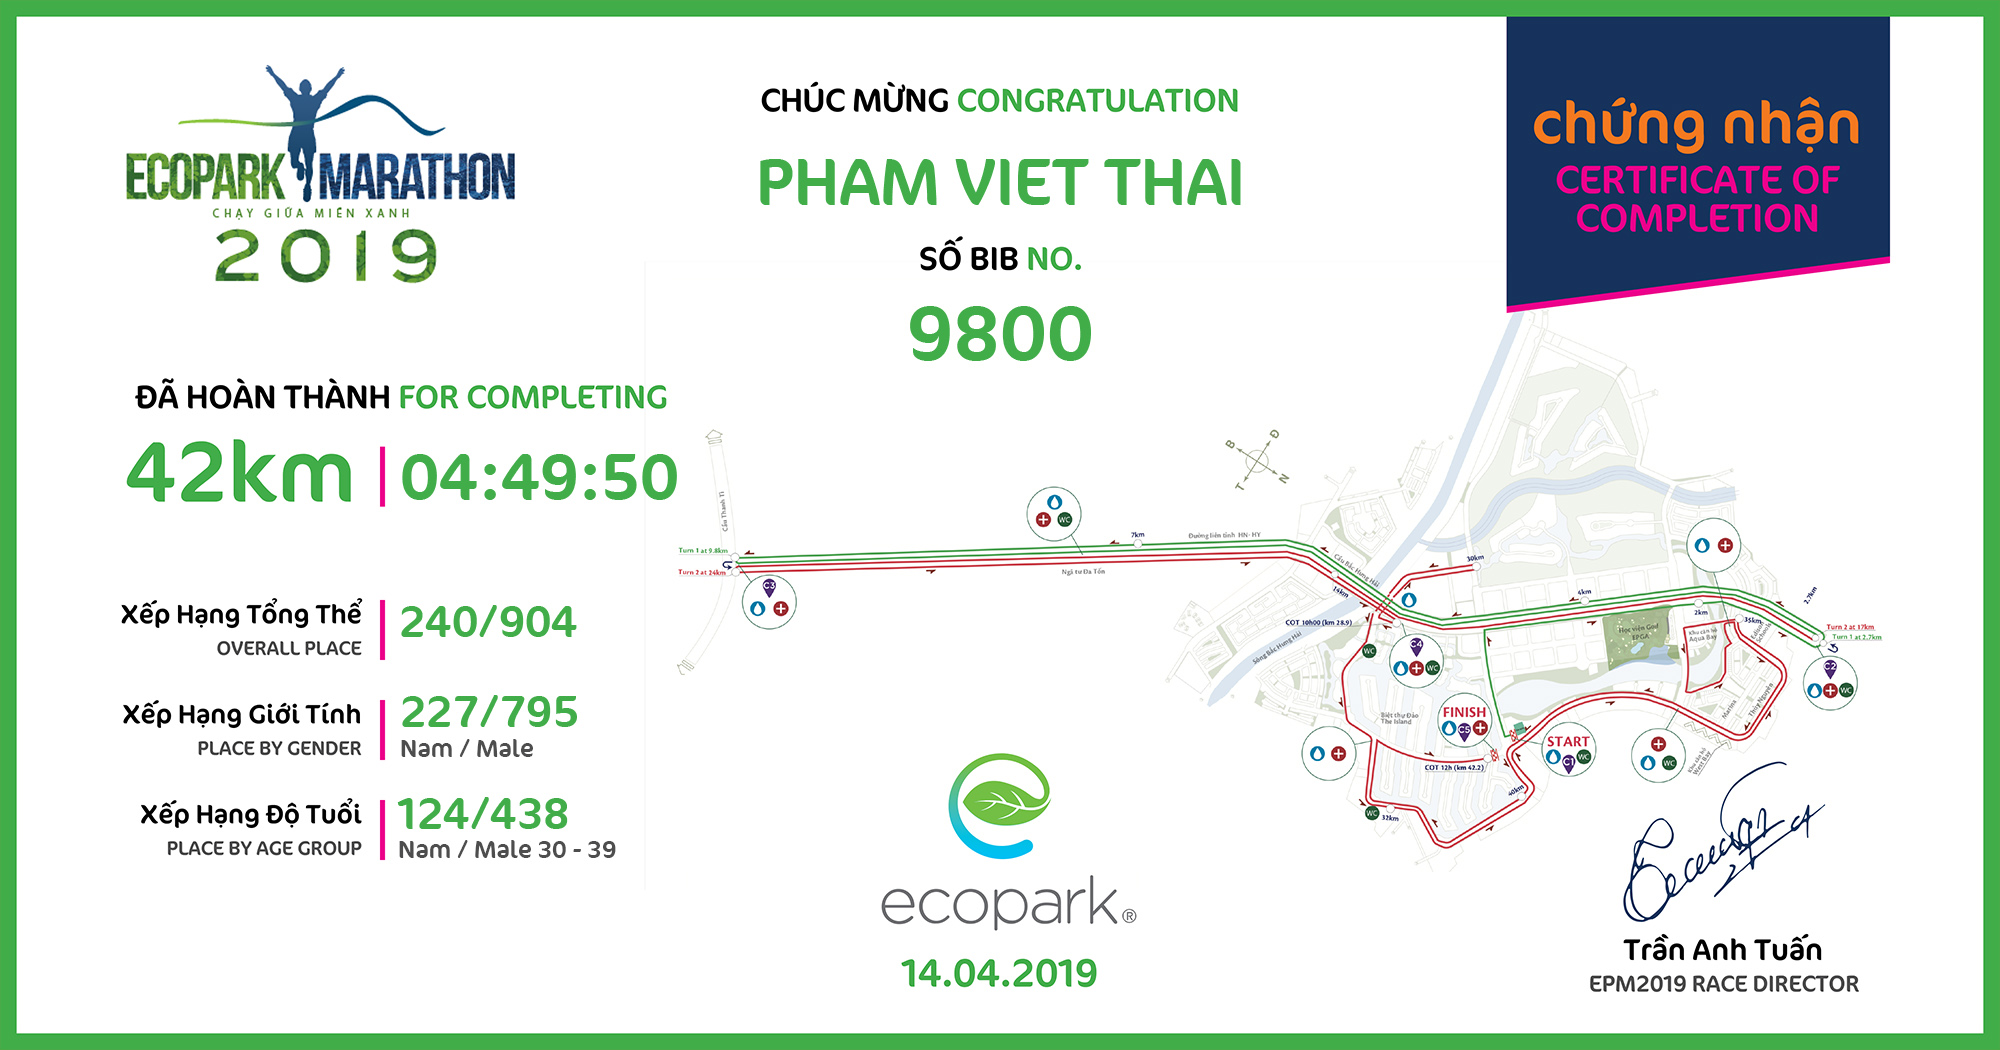 9800 - Pham Viet Thai